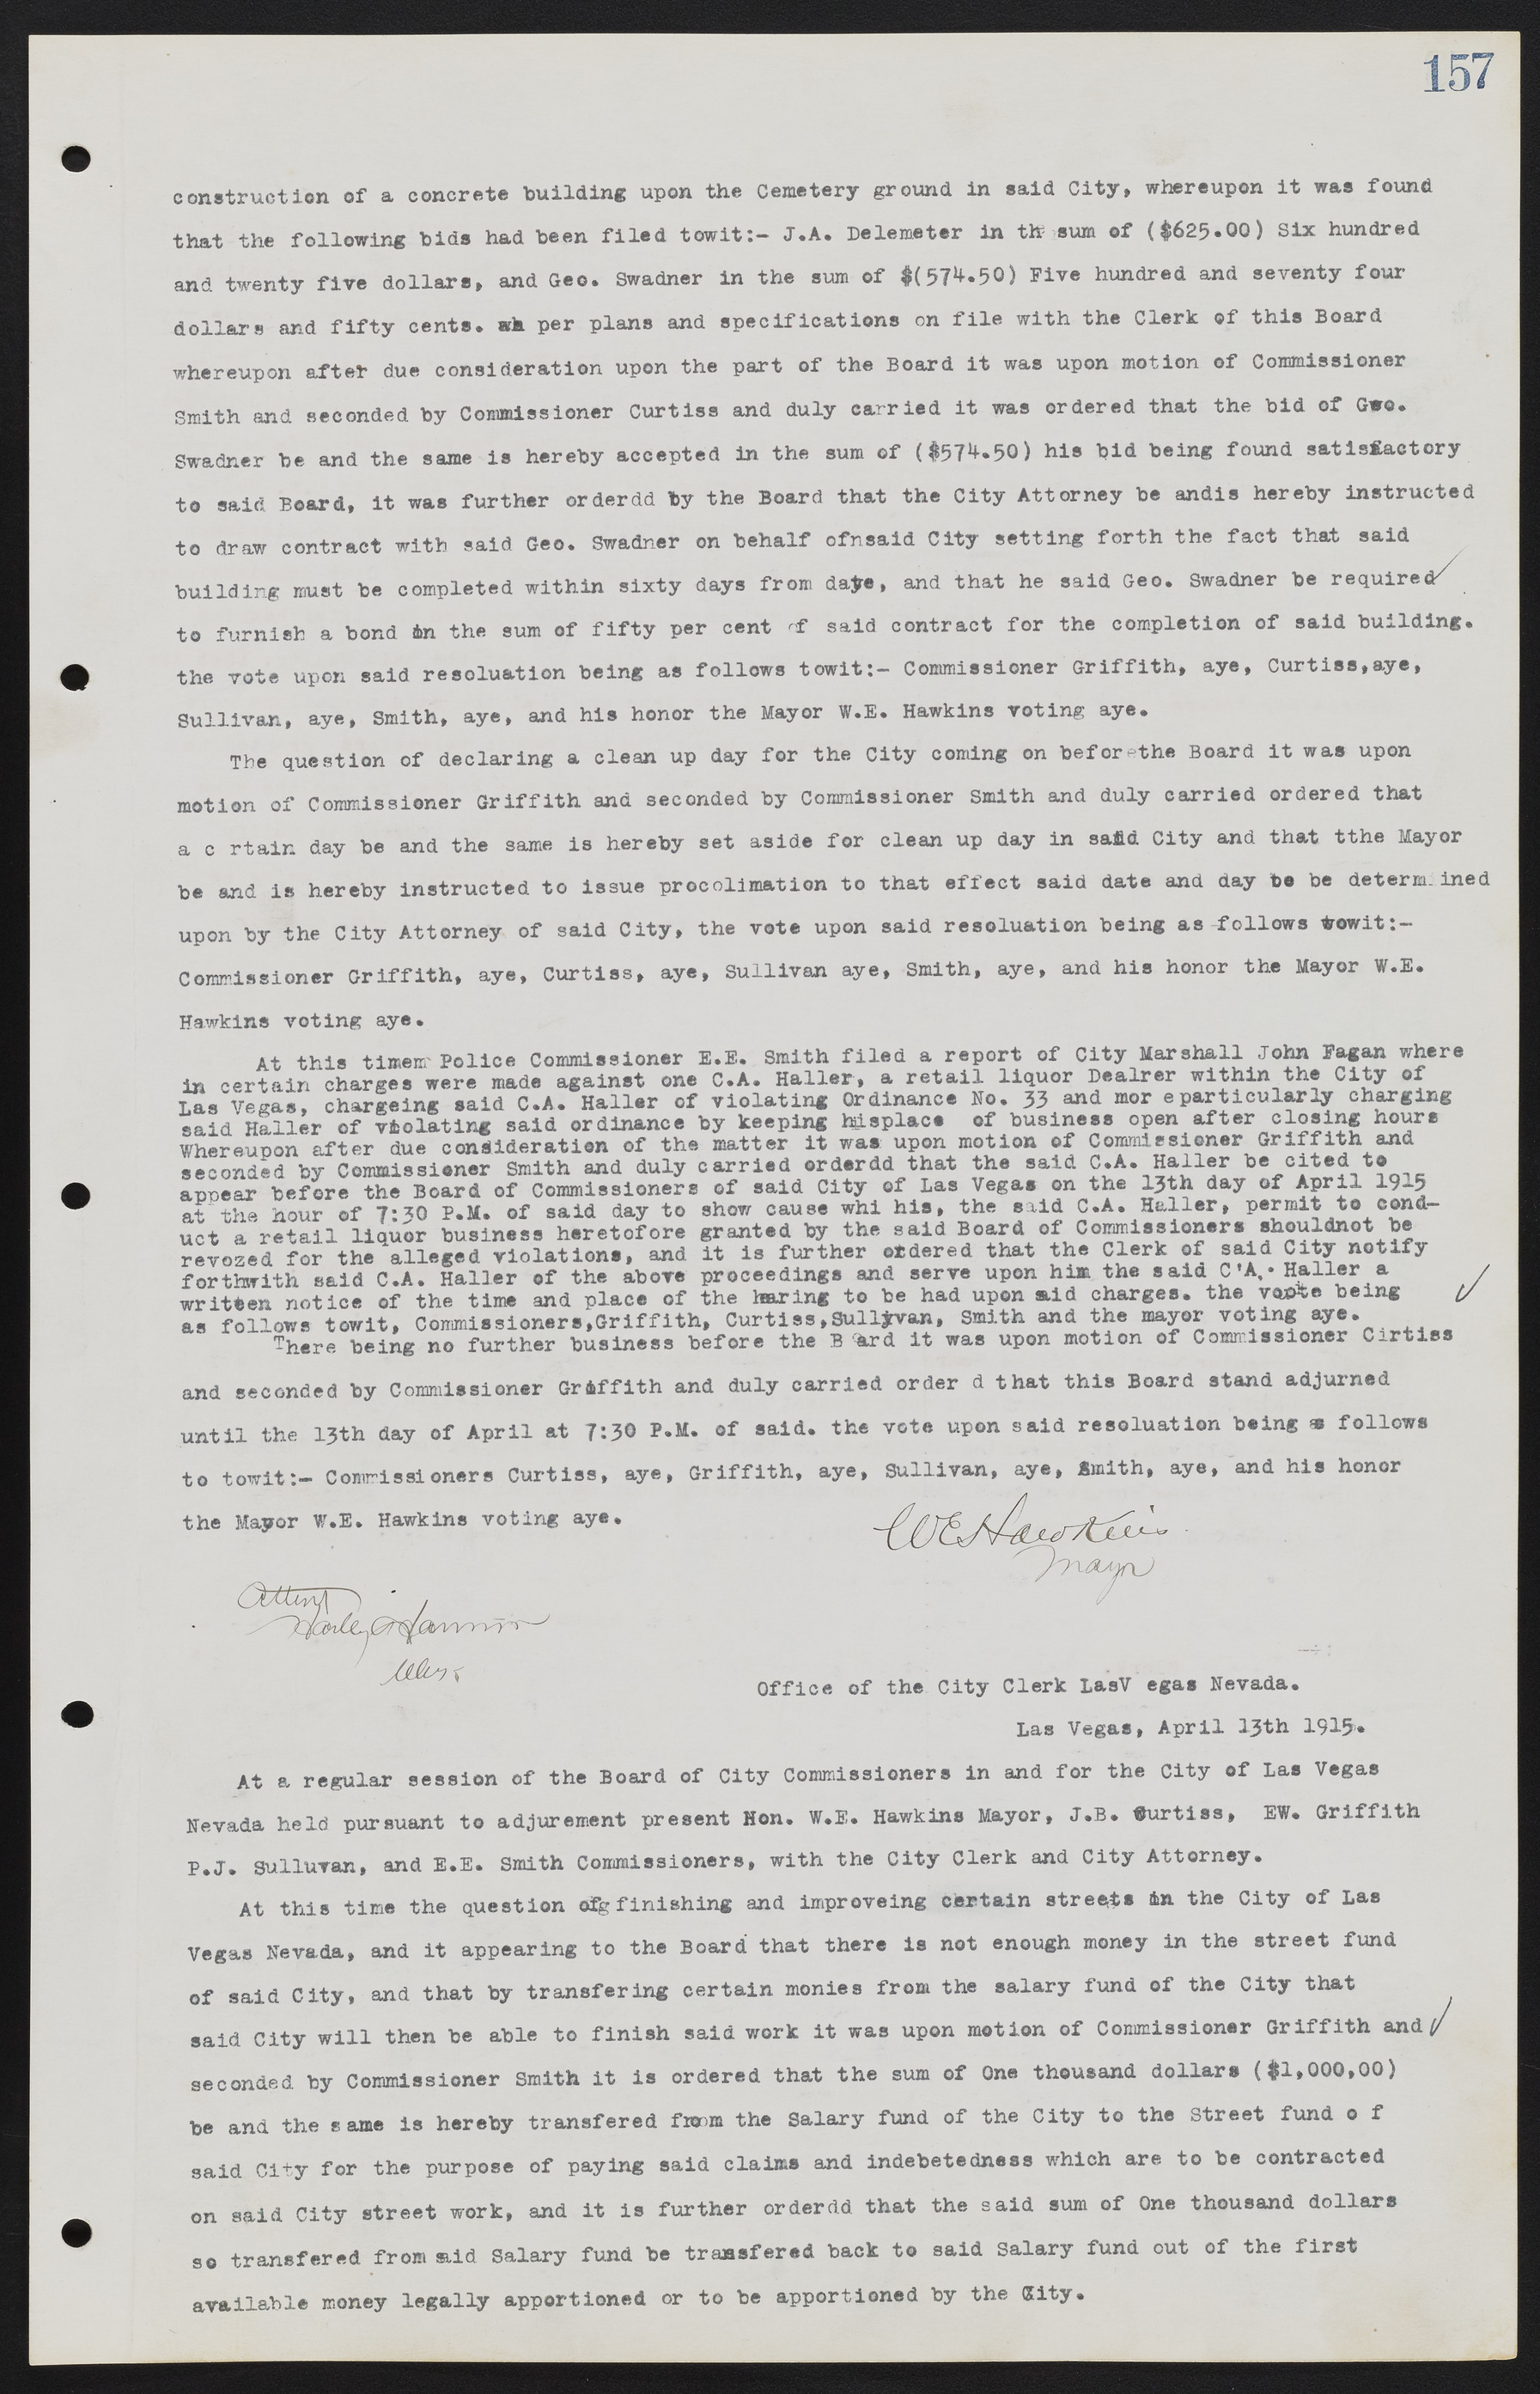 Las Vegas City Commission Minutes, June 22, 1911 to February 7, 1922, lvc000001-173